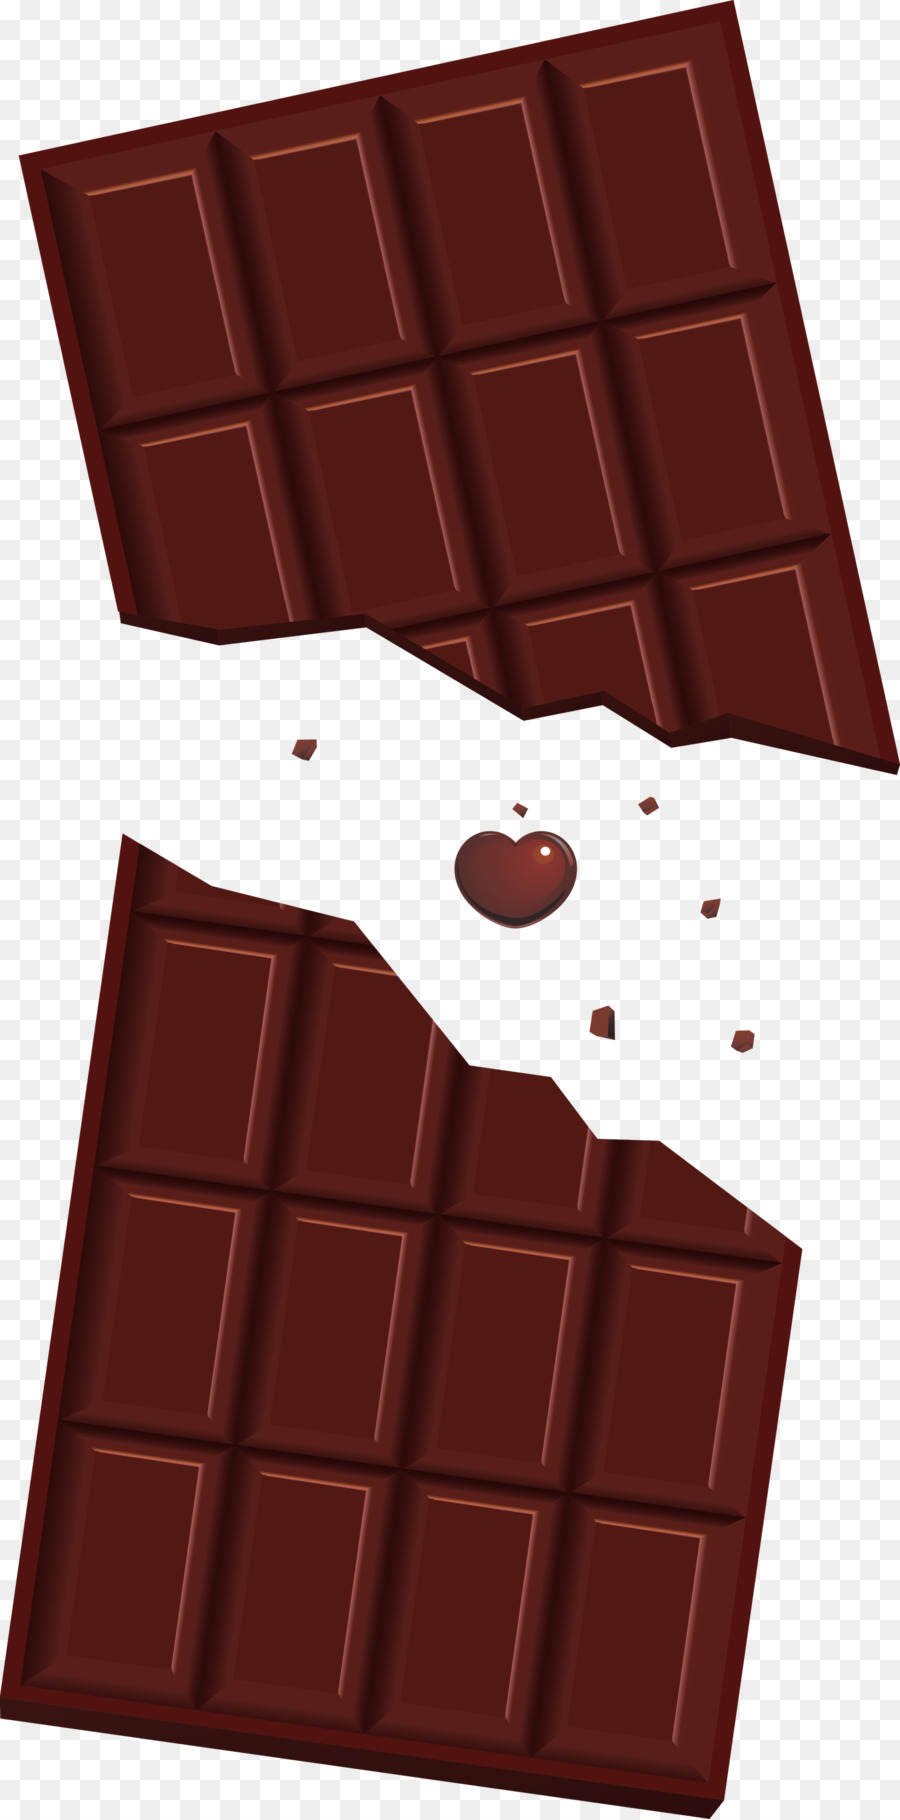 kawaii chocolate bar opened chocolate bar unwrapped chocolate bar